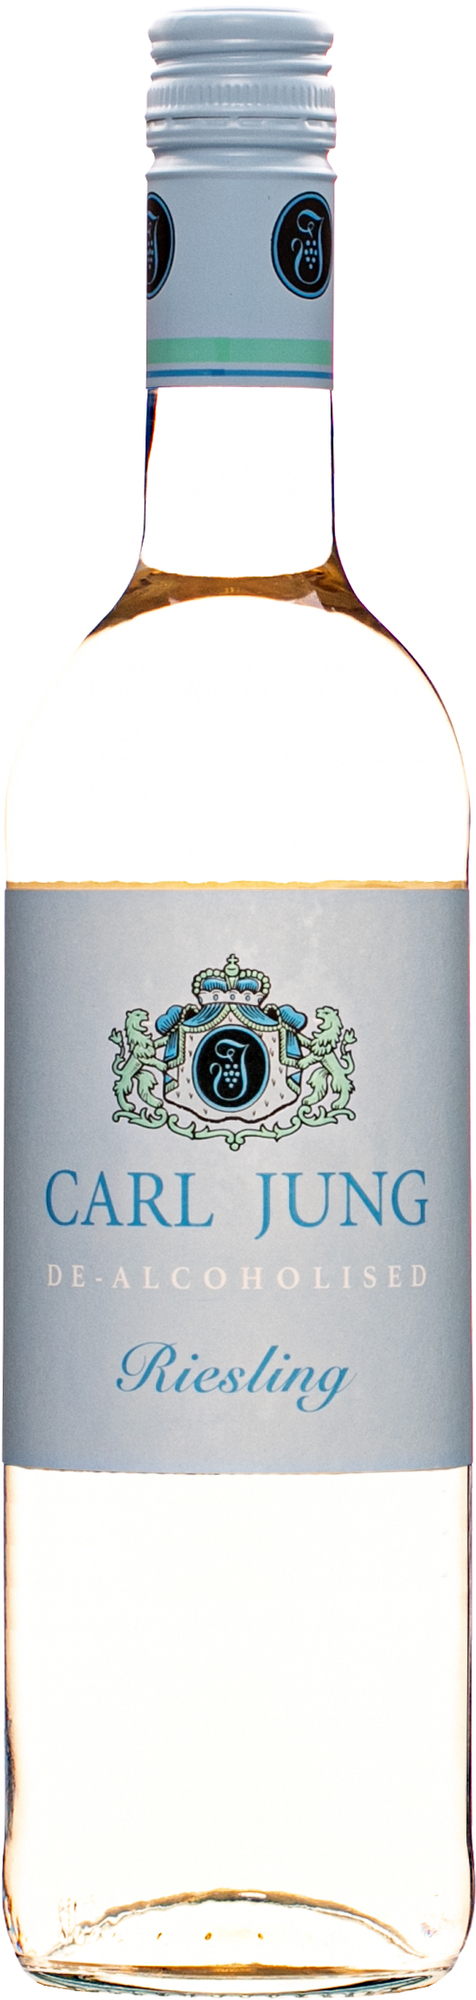 Carl Jung Riesling - Non-alcoholic Bondston wine 